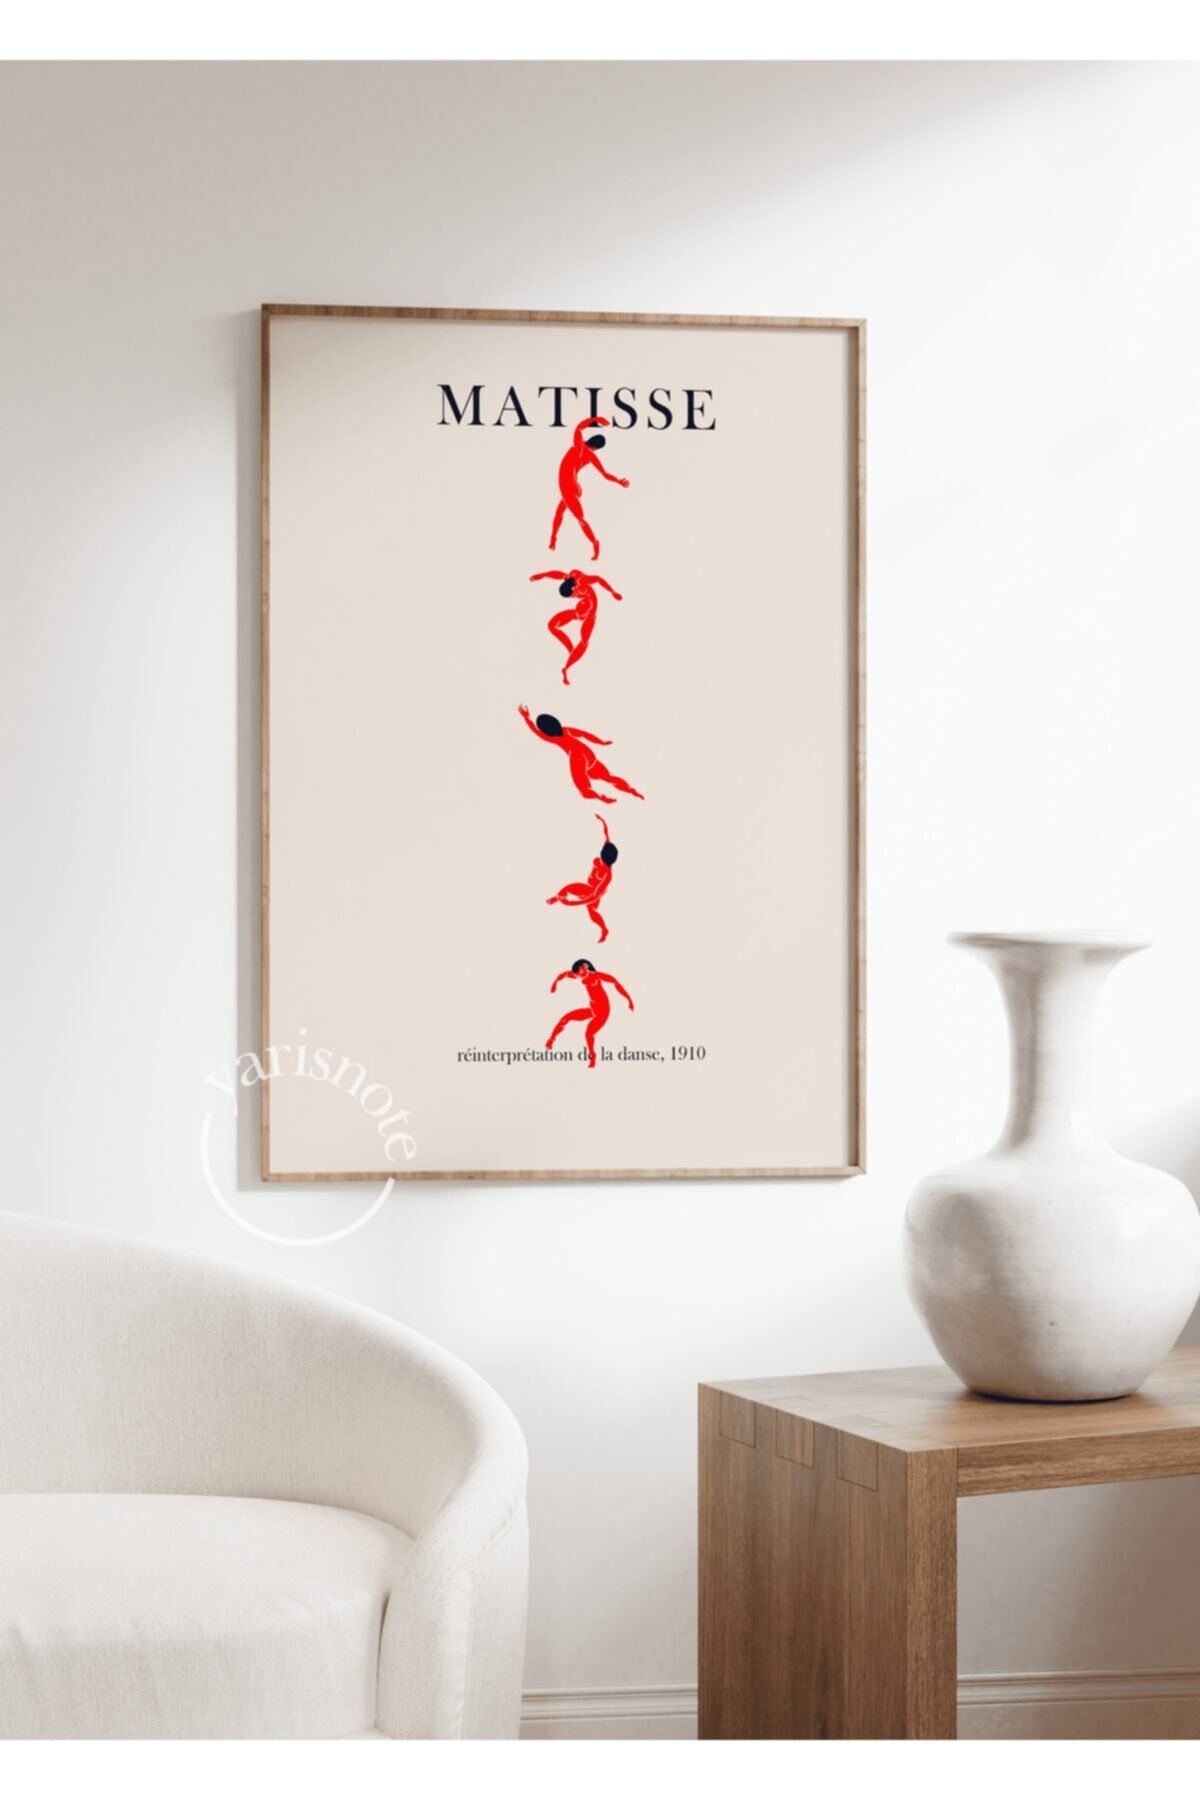 Yaris Note Henri Matisse Çerçevesiz Poster